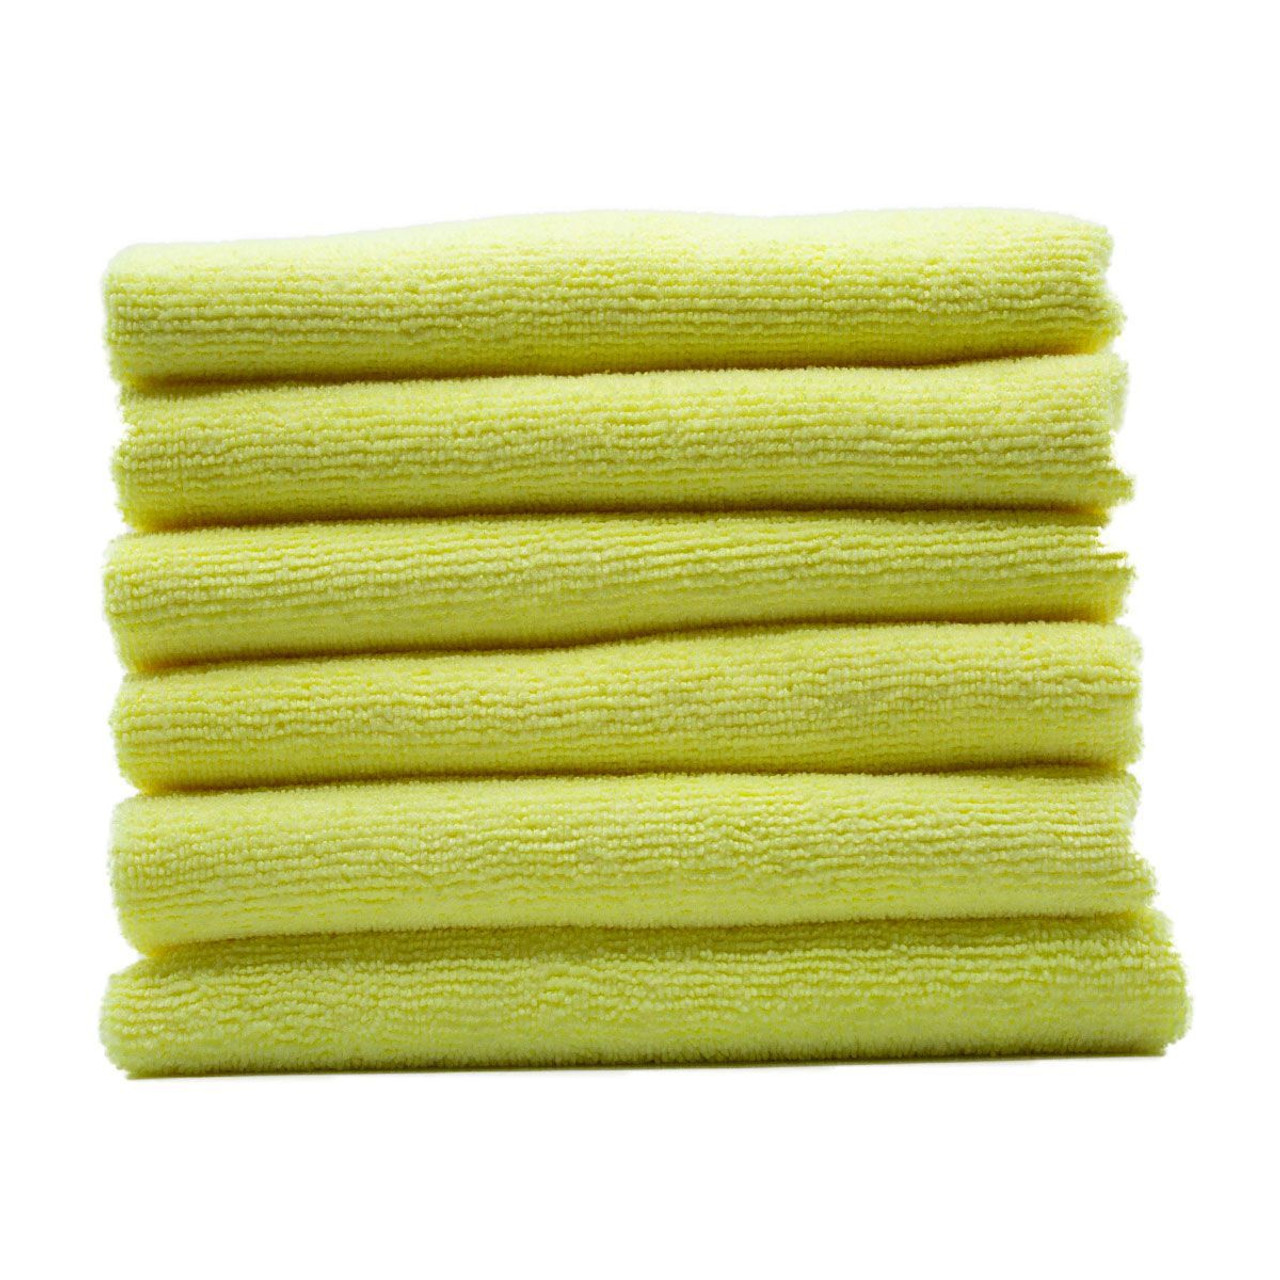 Cobra Heat Wave Yellow Utility Towel - 6-Pack